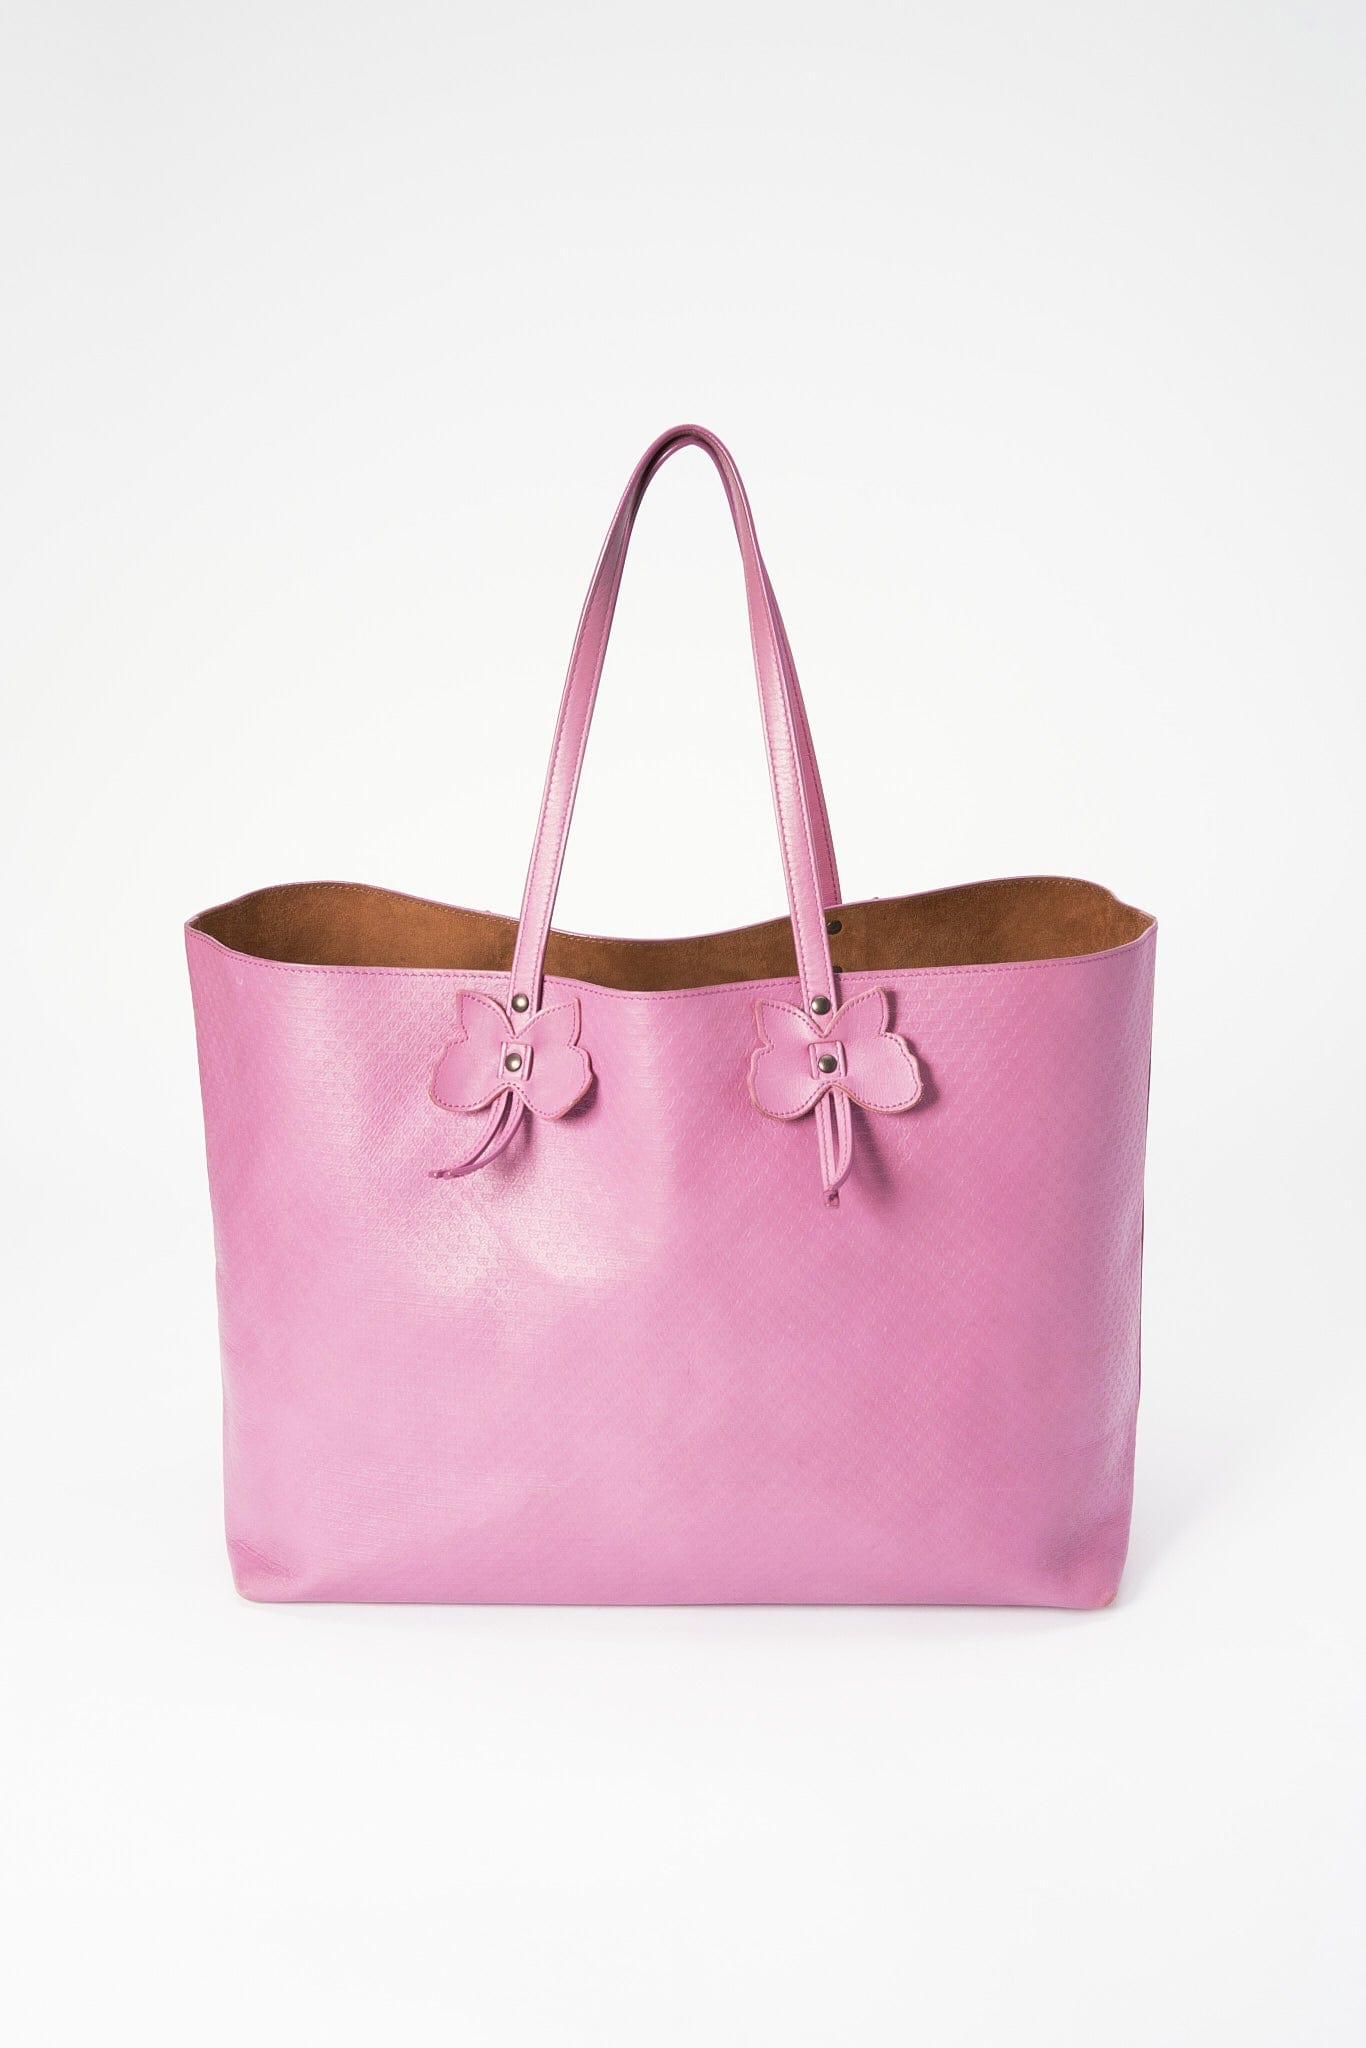 Bottega Veneta Butterfly Leather Tote Bag - Pink